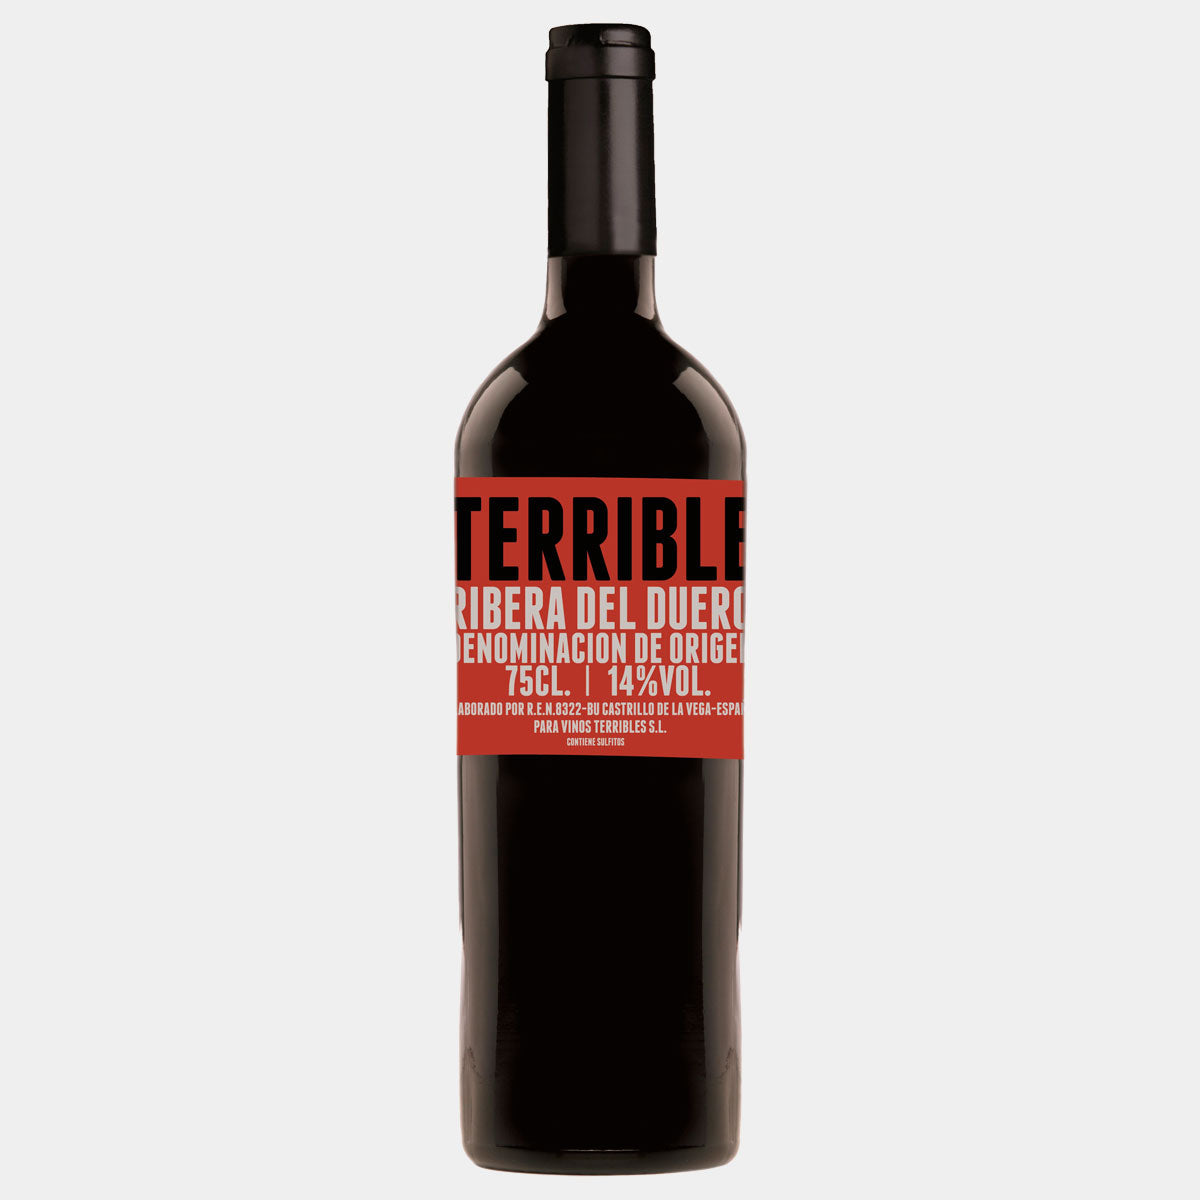 El Terrible Roble - Wines and Copas Barcelona